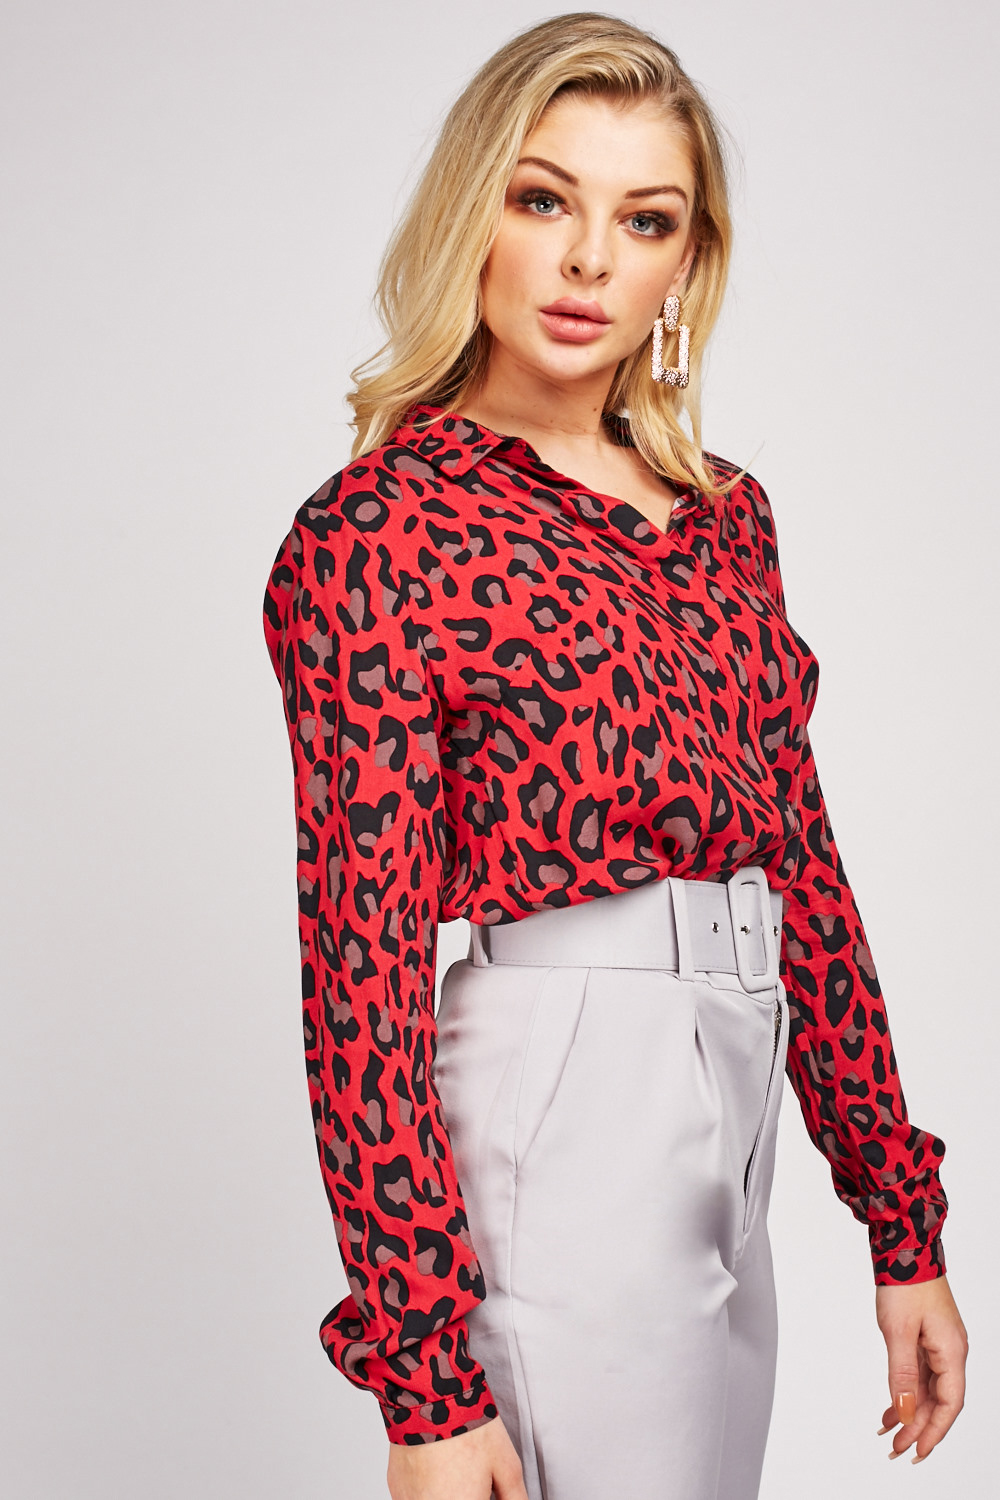 Leopard Print Shirt - Just $3